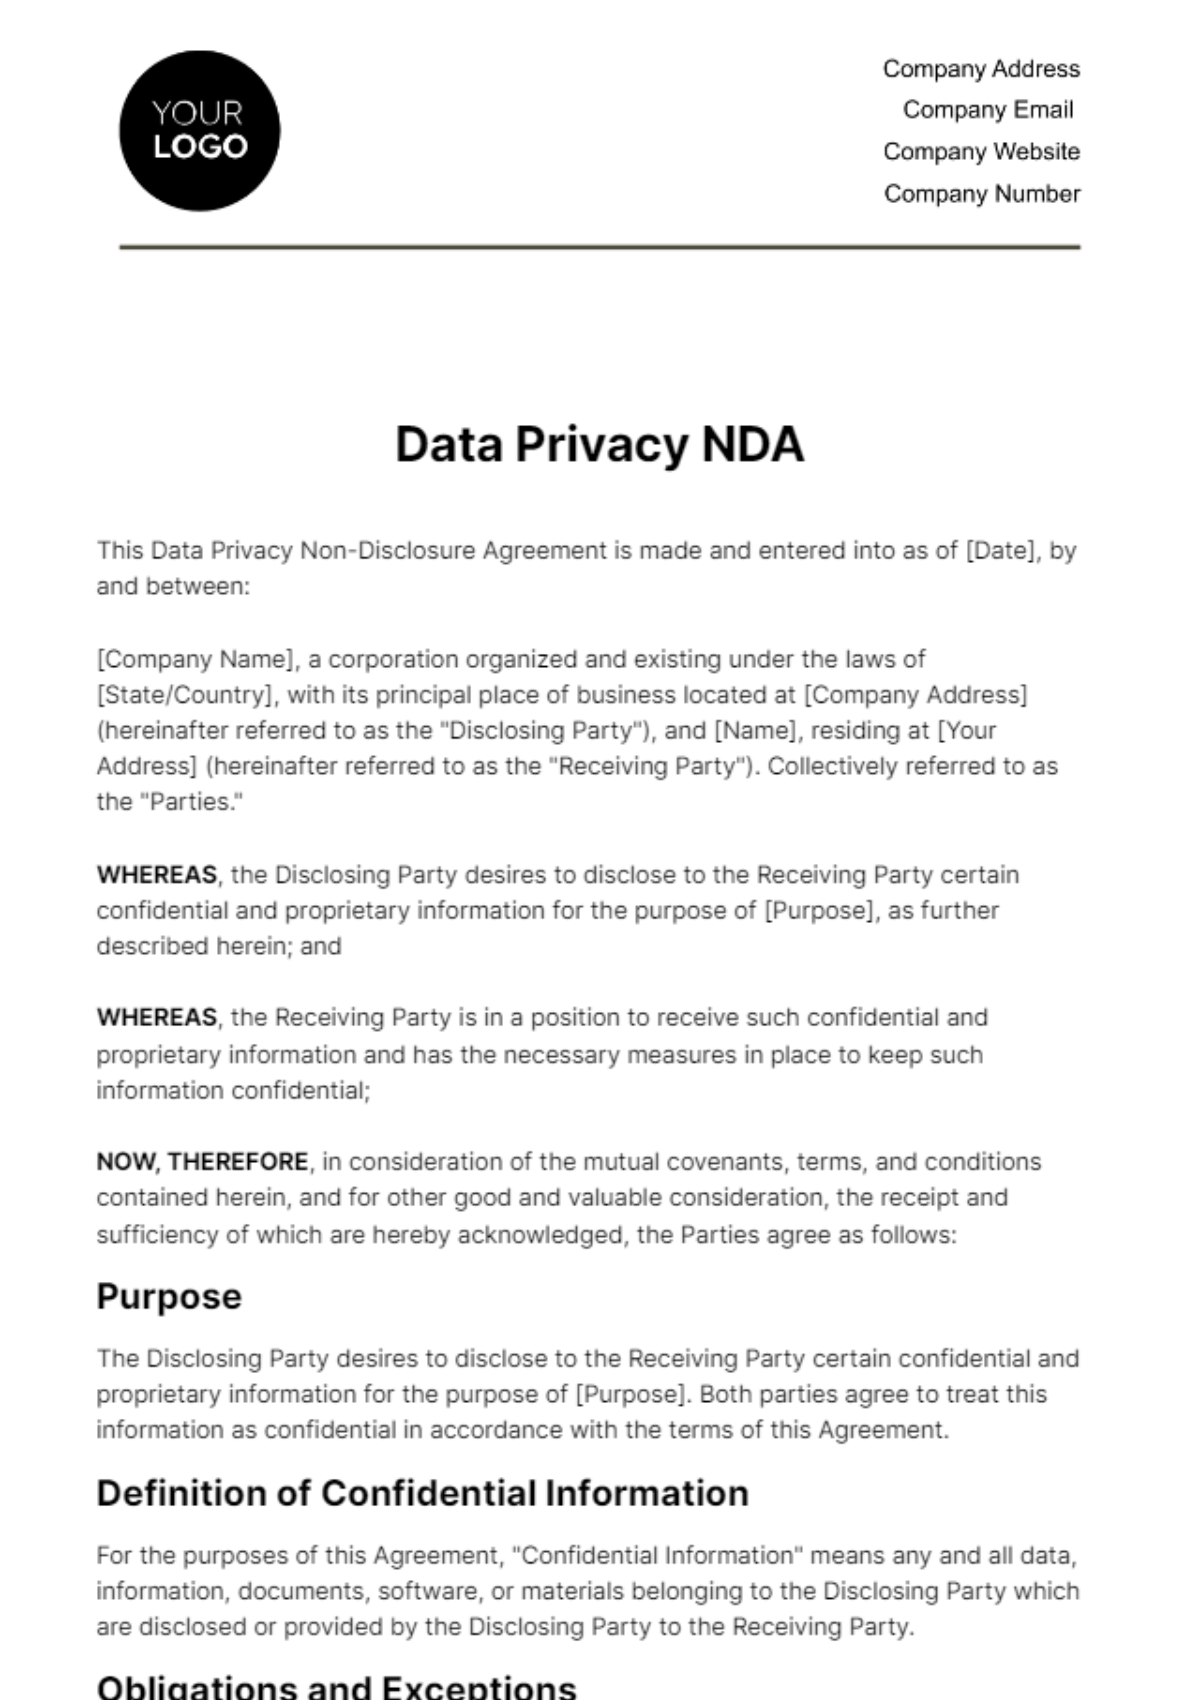 Data Privacy NDA HR Template